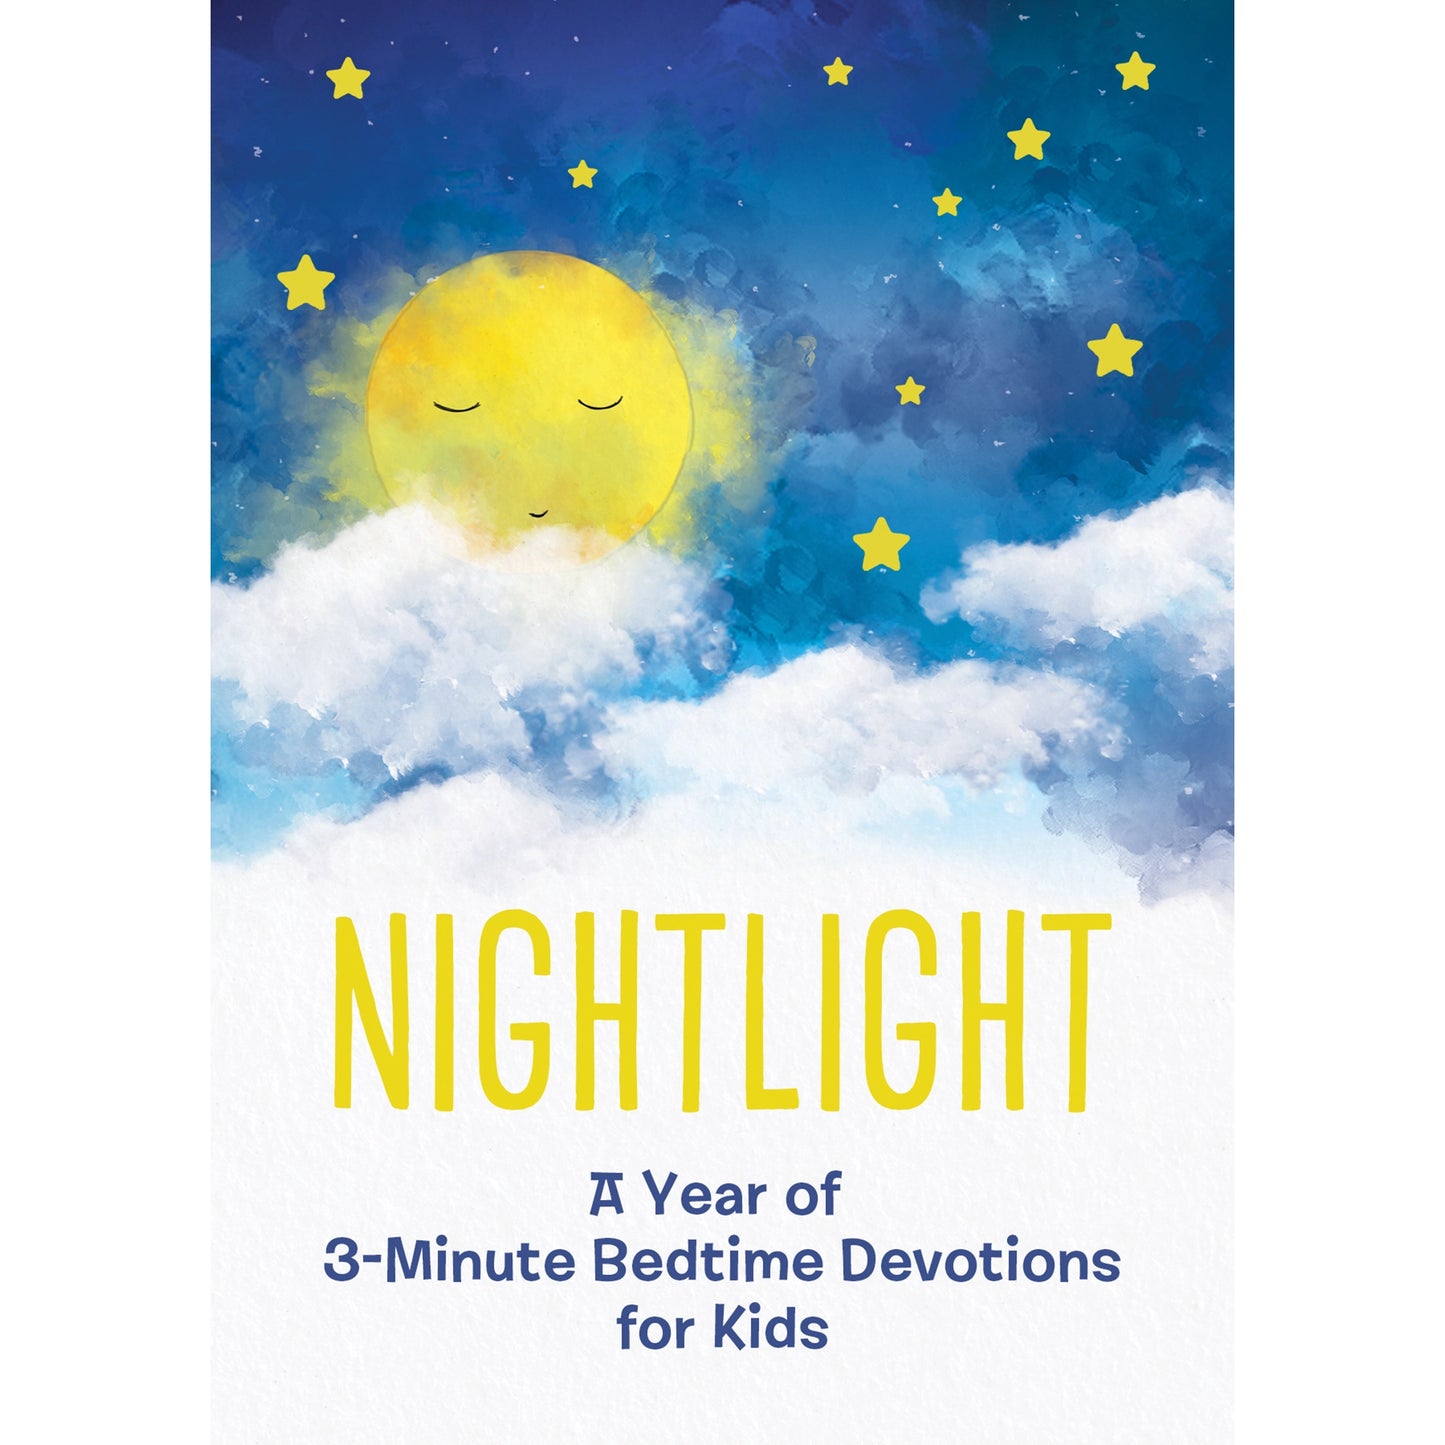 Nightlight: A Year of 3-Minute Bedtime Devotions for Kids